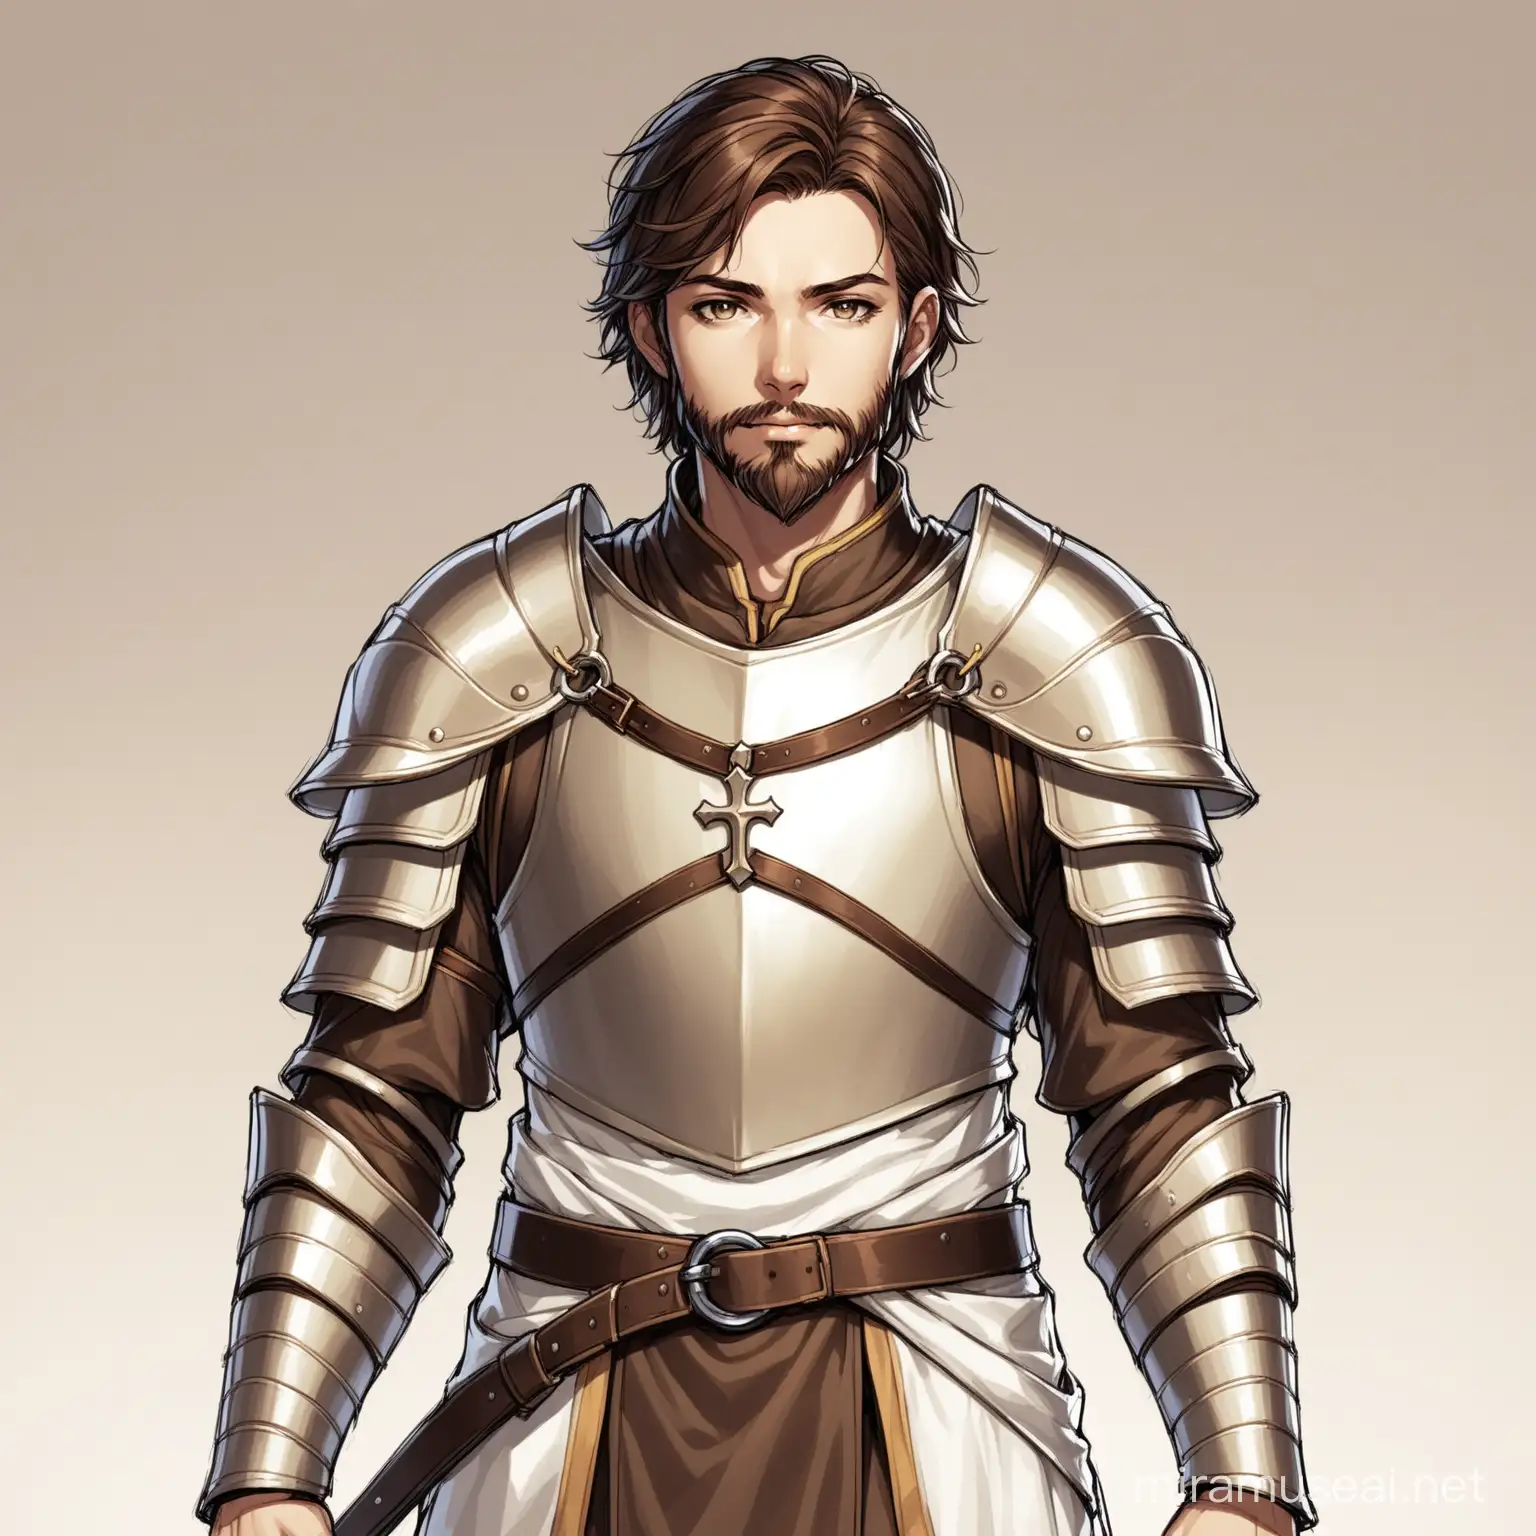 Male human cleric 30 years old, short beard, short brown hair, wearing splint armor.
